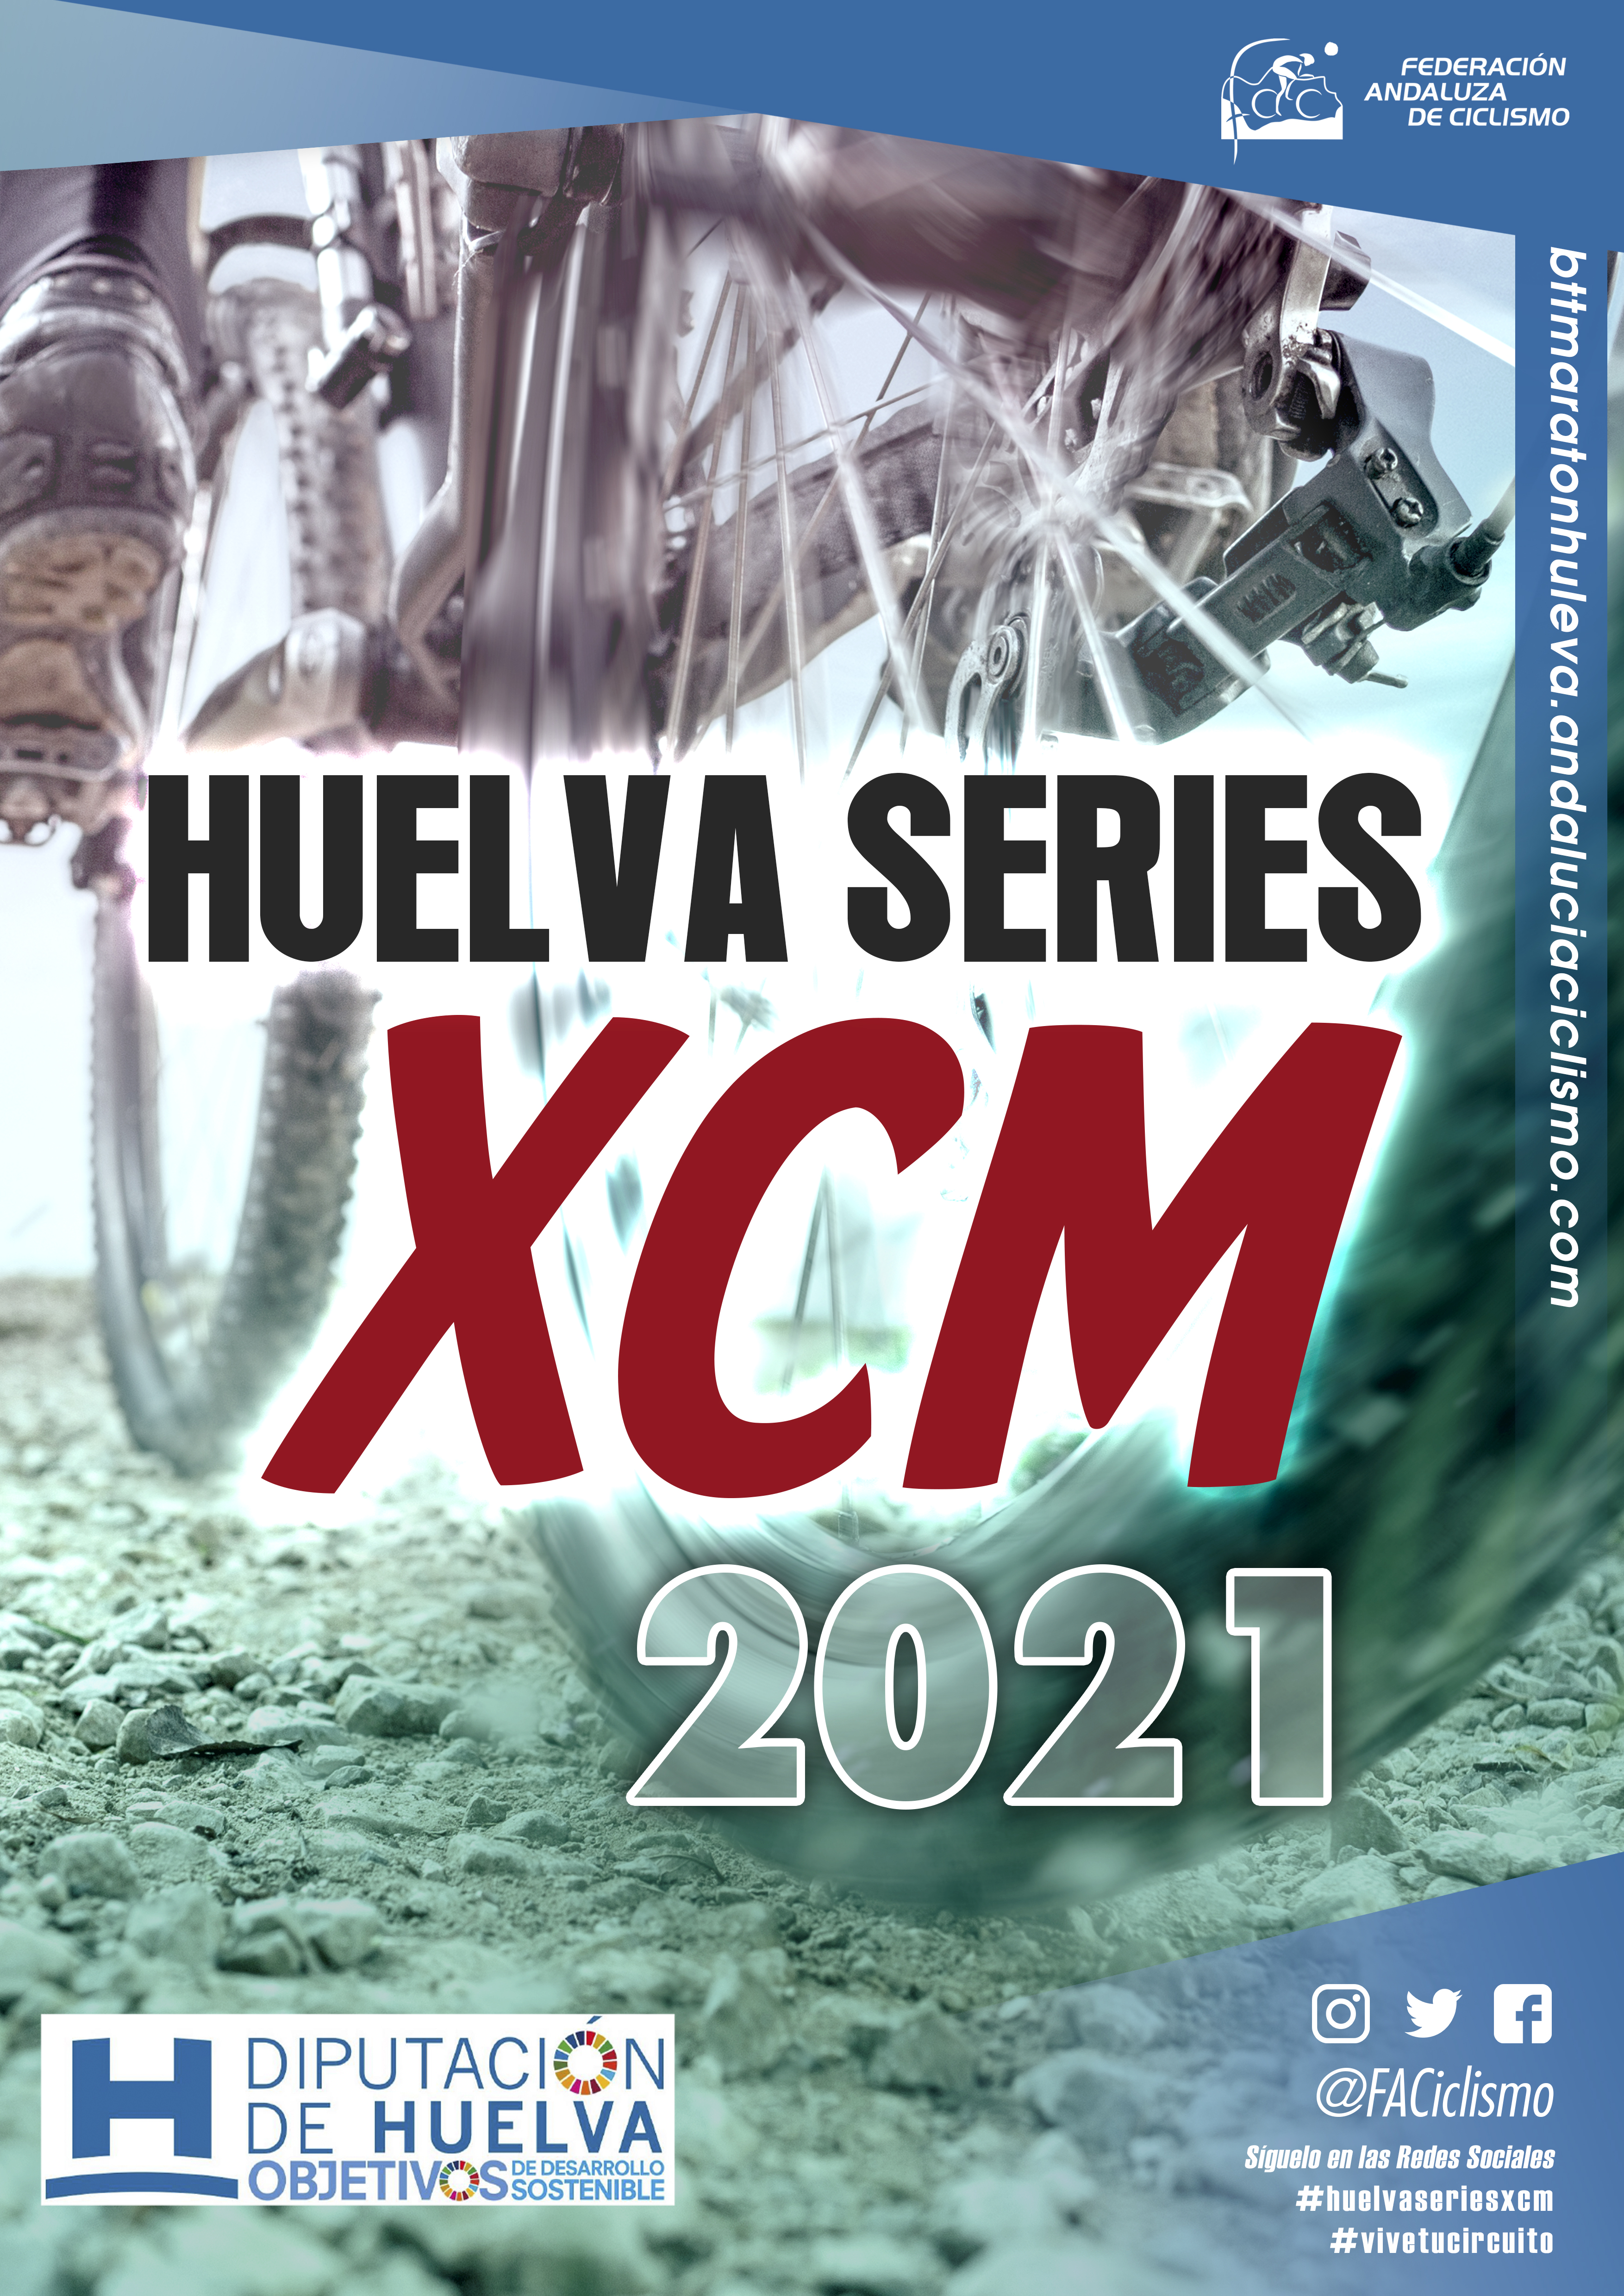 Huelva Series XCM 2021